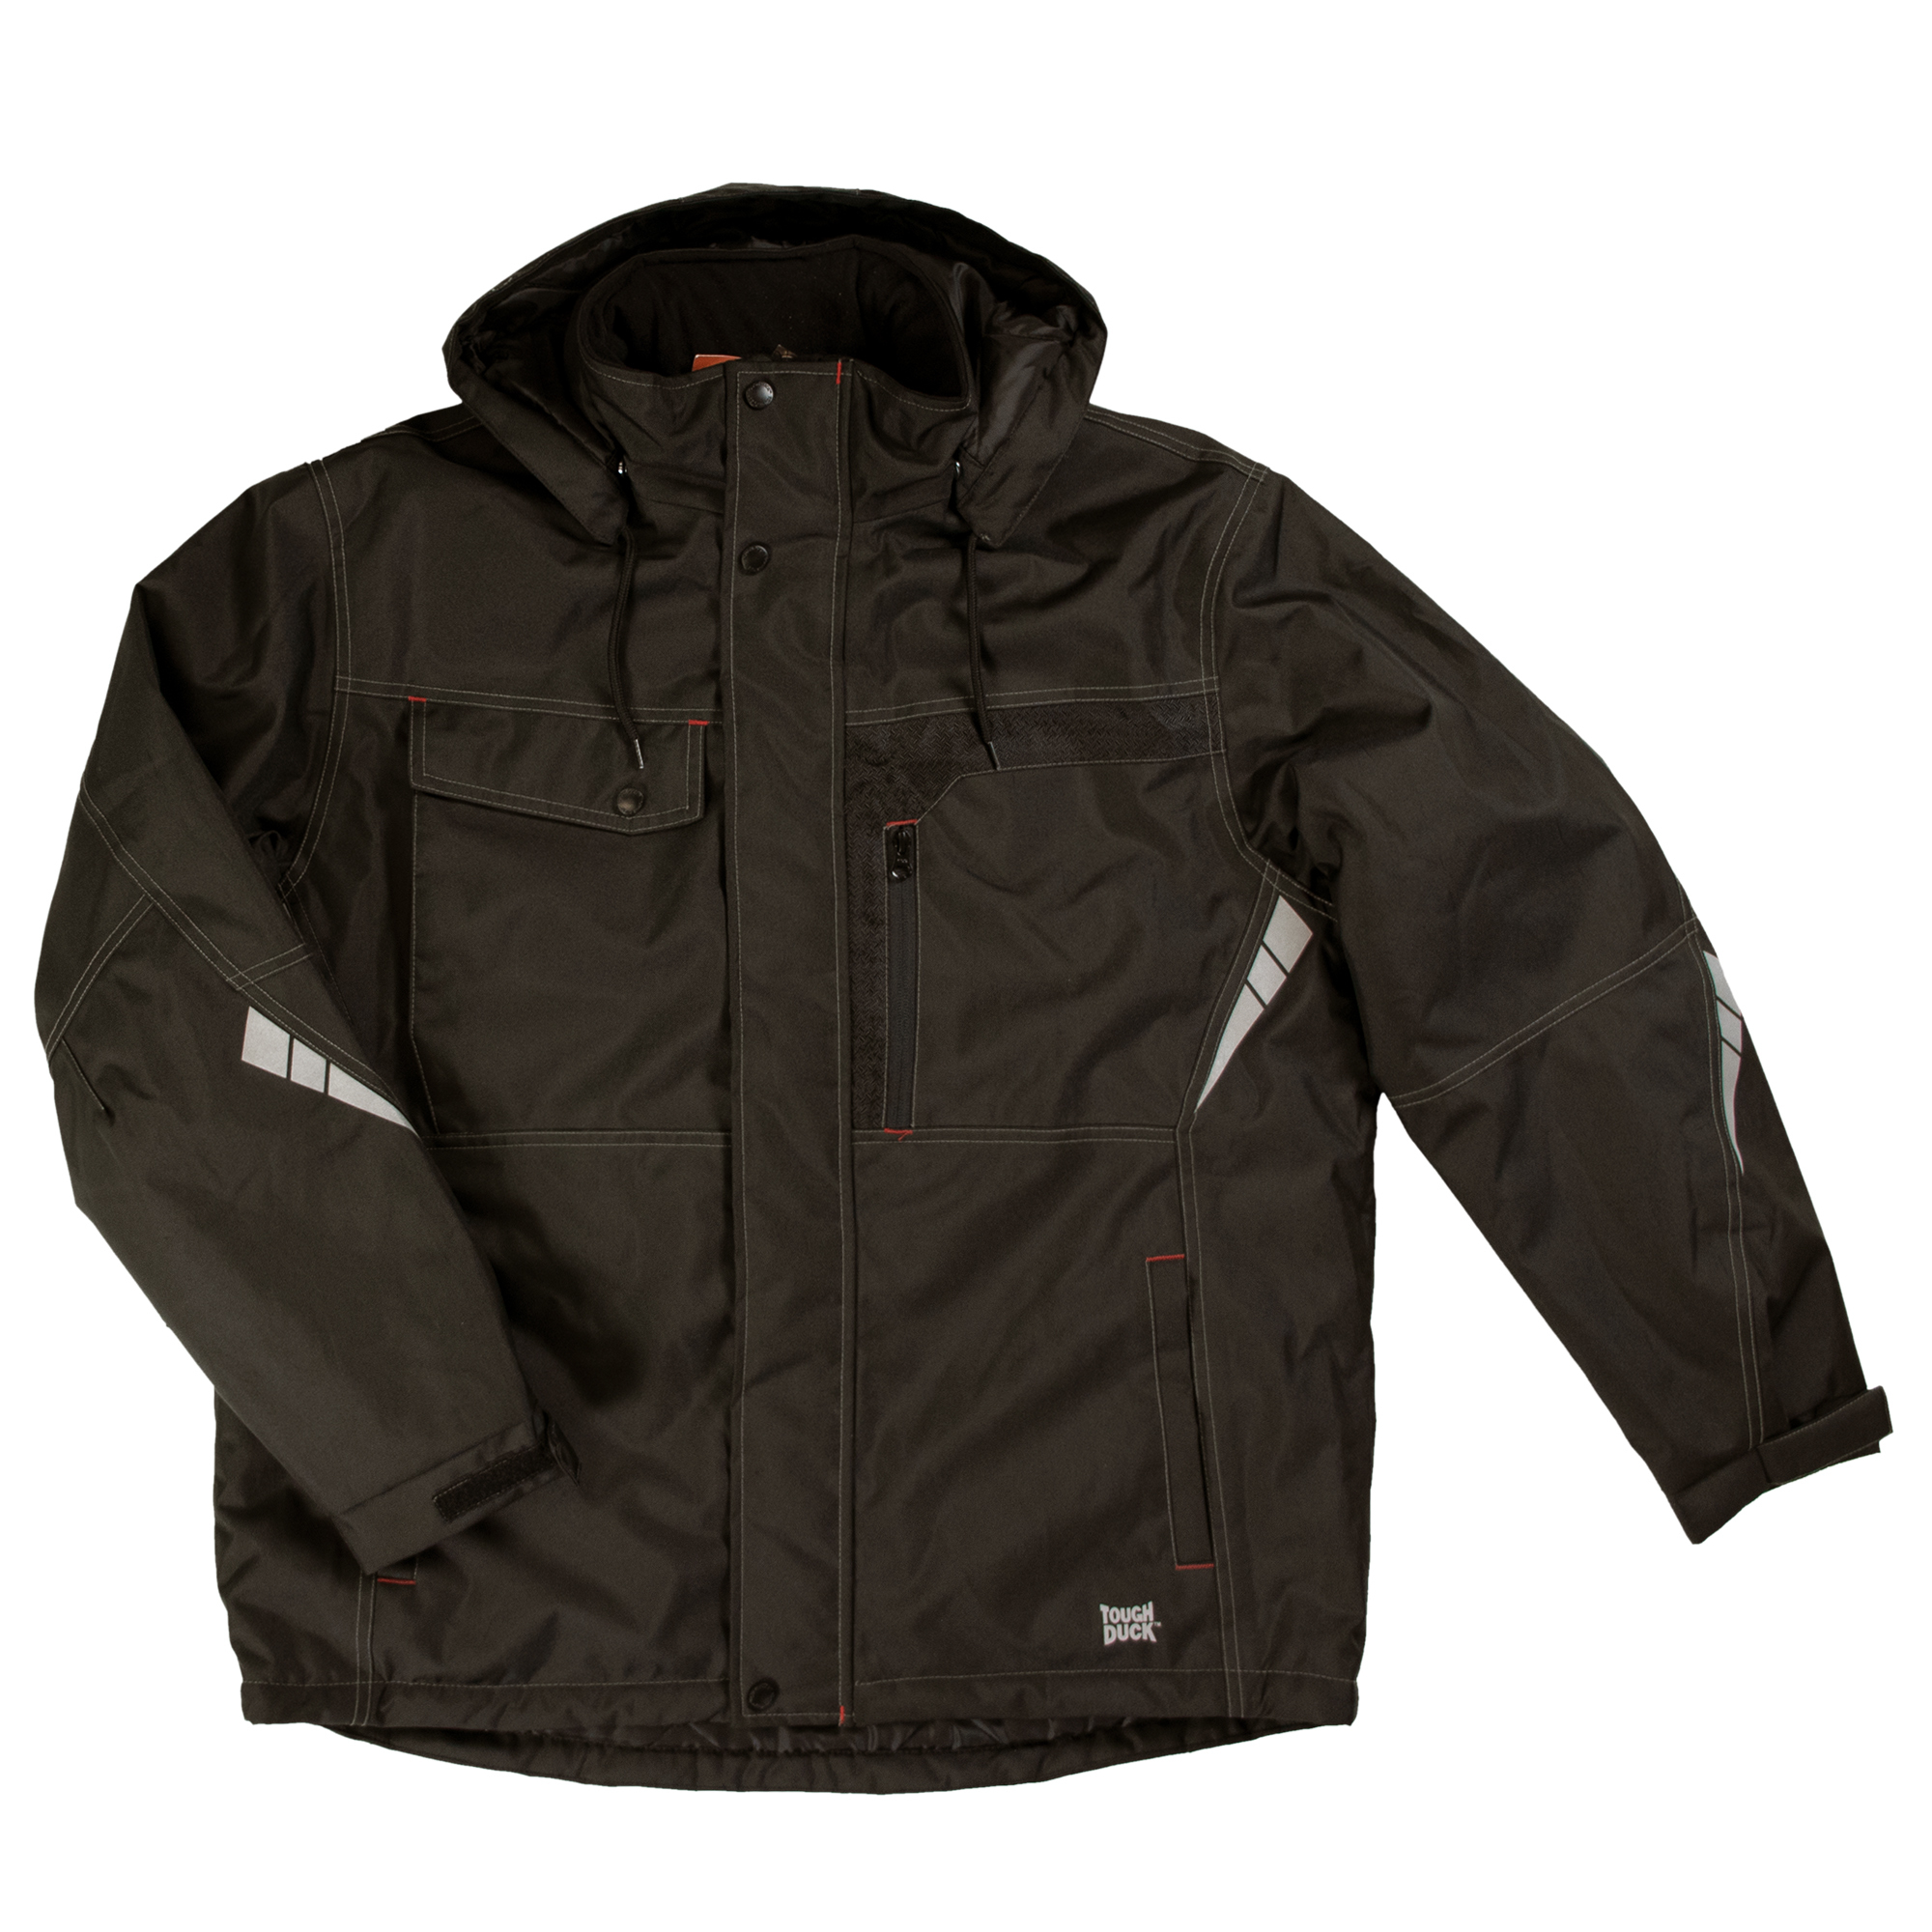 Tough Duck, Poly Oxford Jacket, Size L, Color BLACK, Model WJ131-BLACK-L